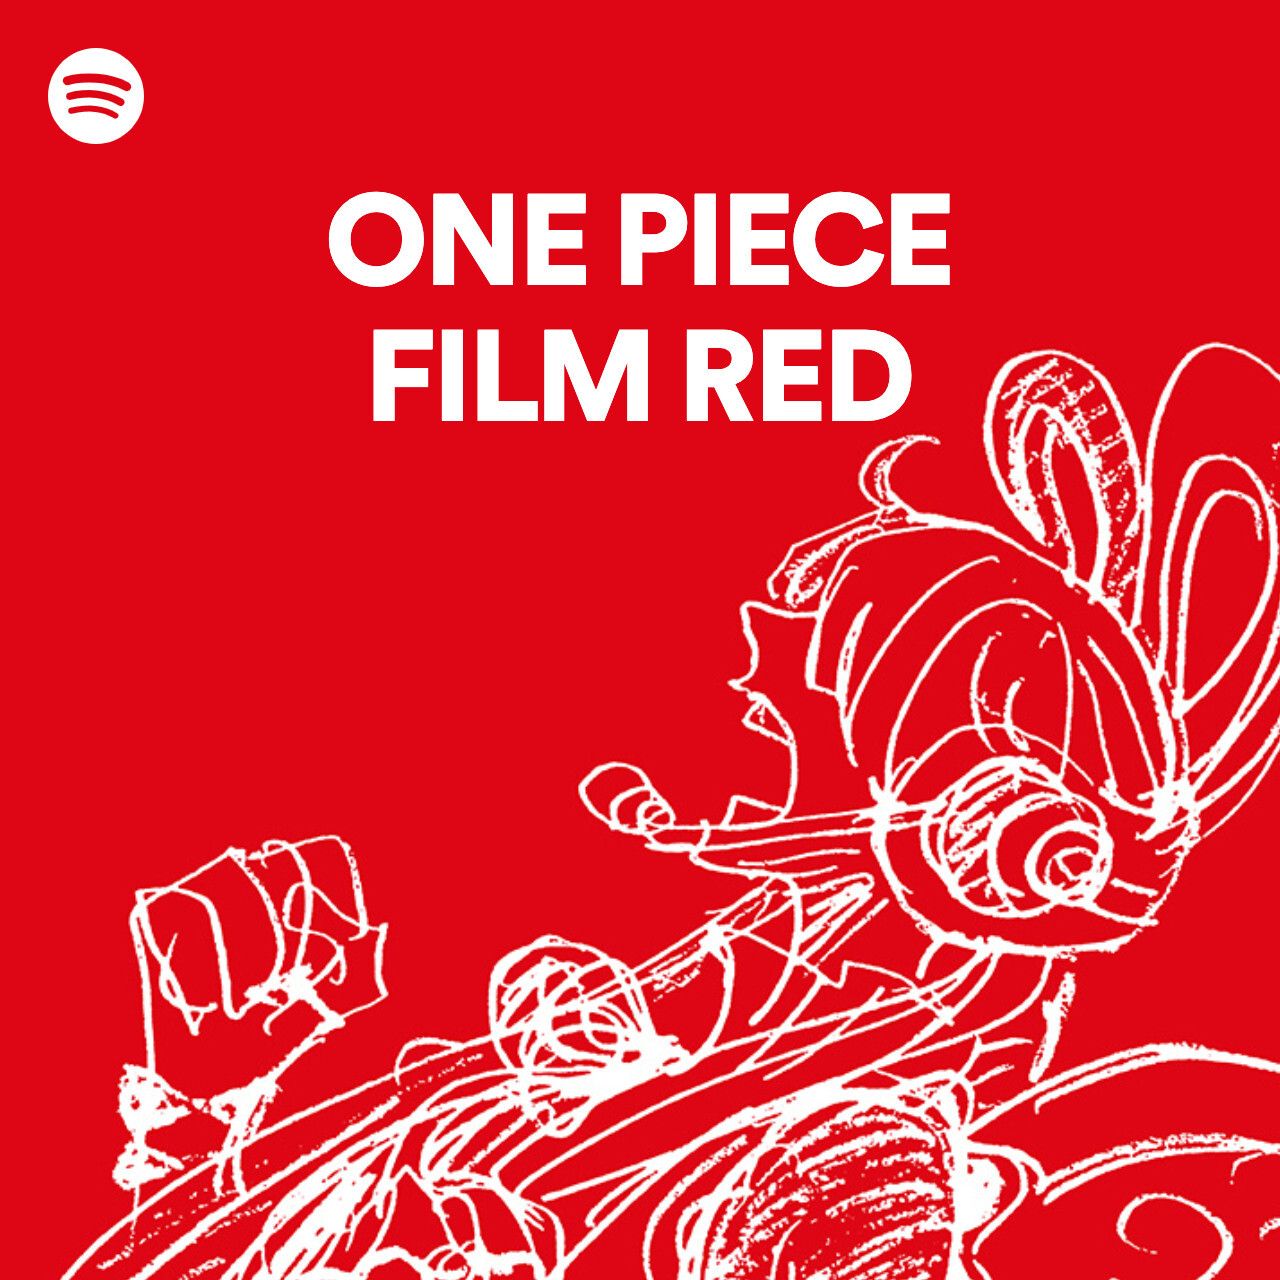 One Piece Film Red を音楽や音声 映像で楽しむspotifyプレイリストが登場 概要